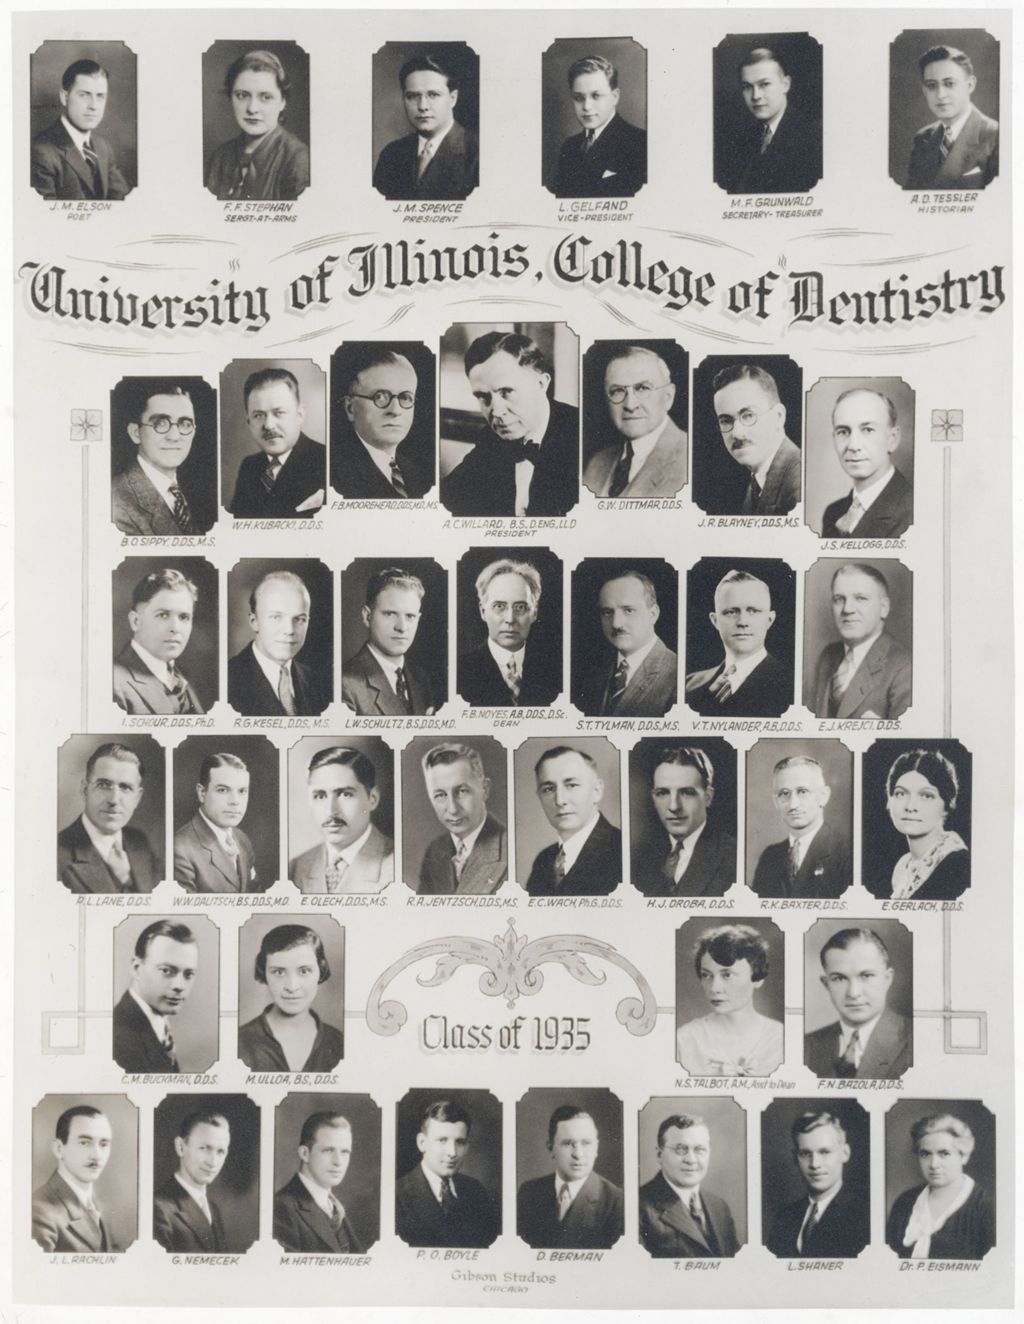 1935 graduating class, University of Illinois College of Dentistry